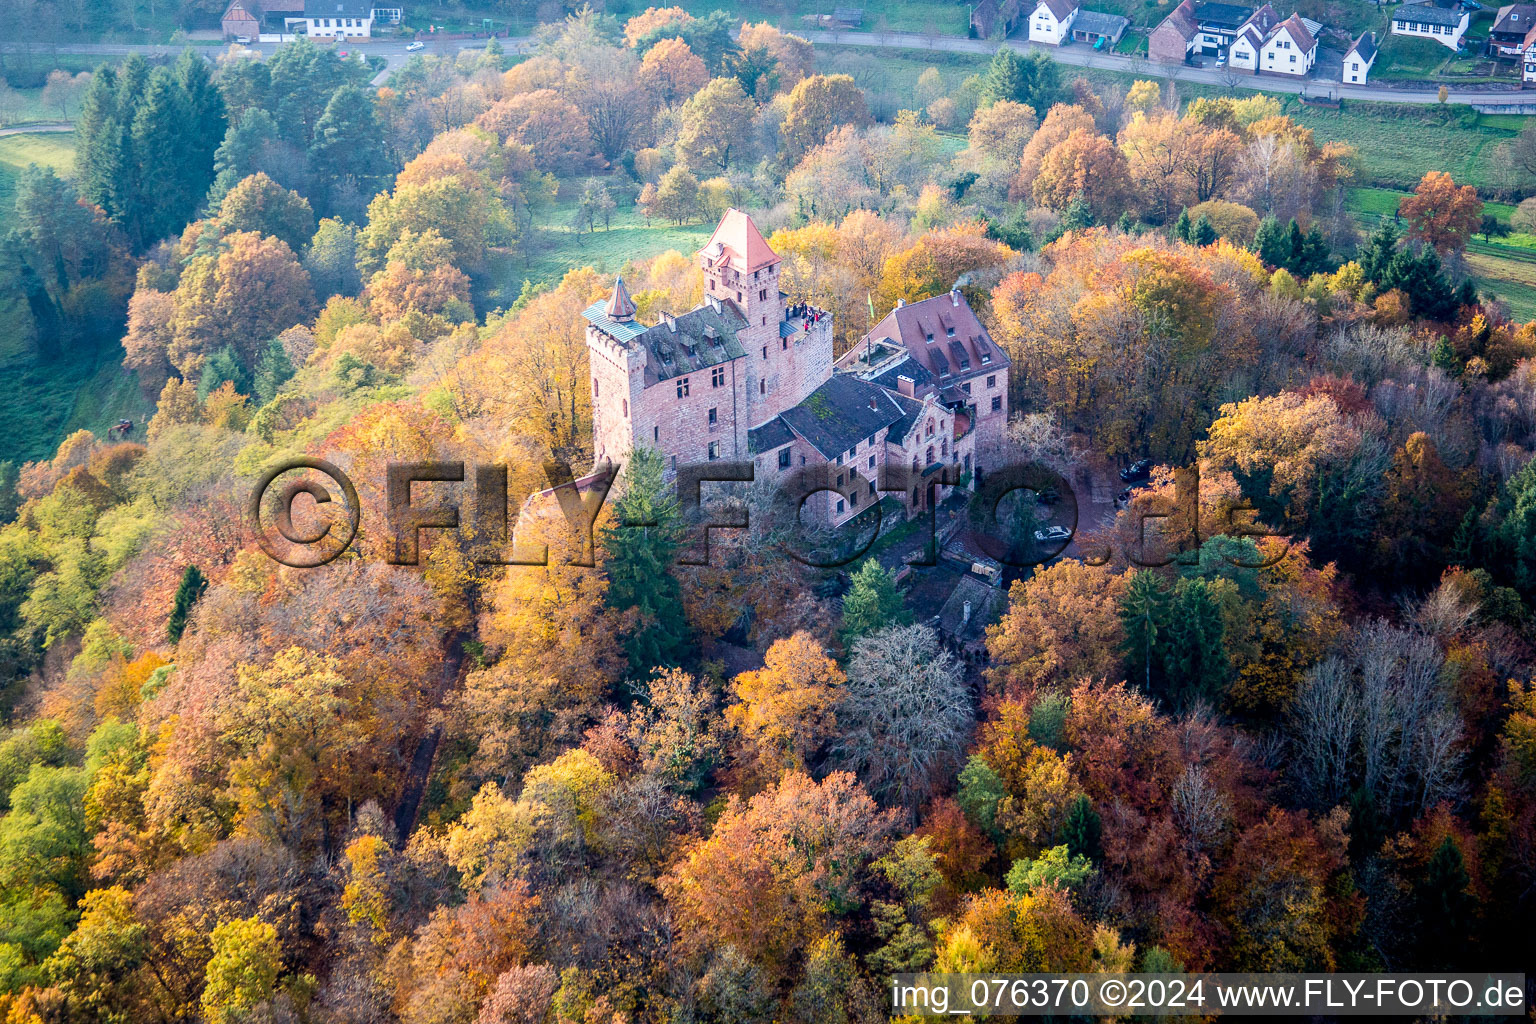 Castle of the fortress Berwartstein in Erlenbach bei Dahn in the state Rhineland-Palatinate